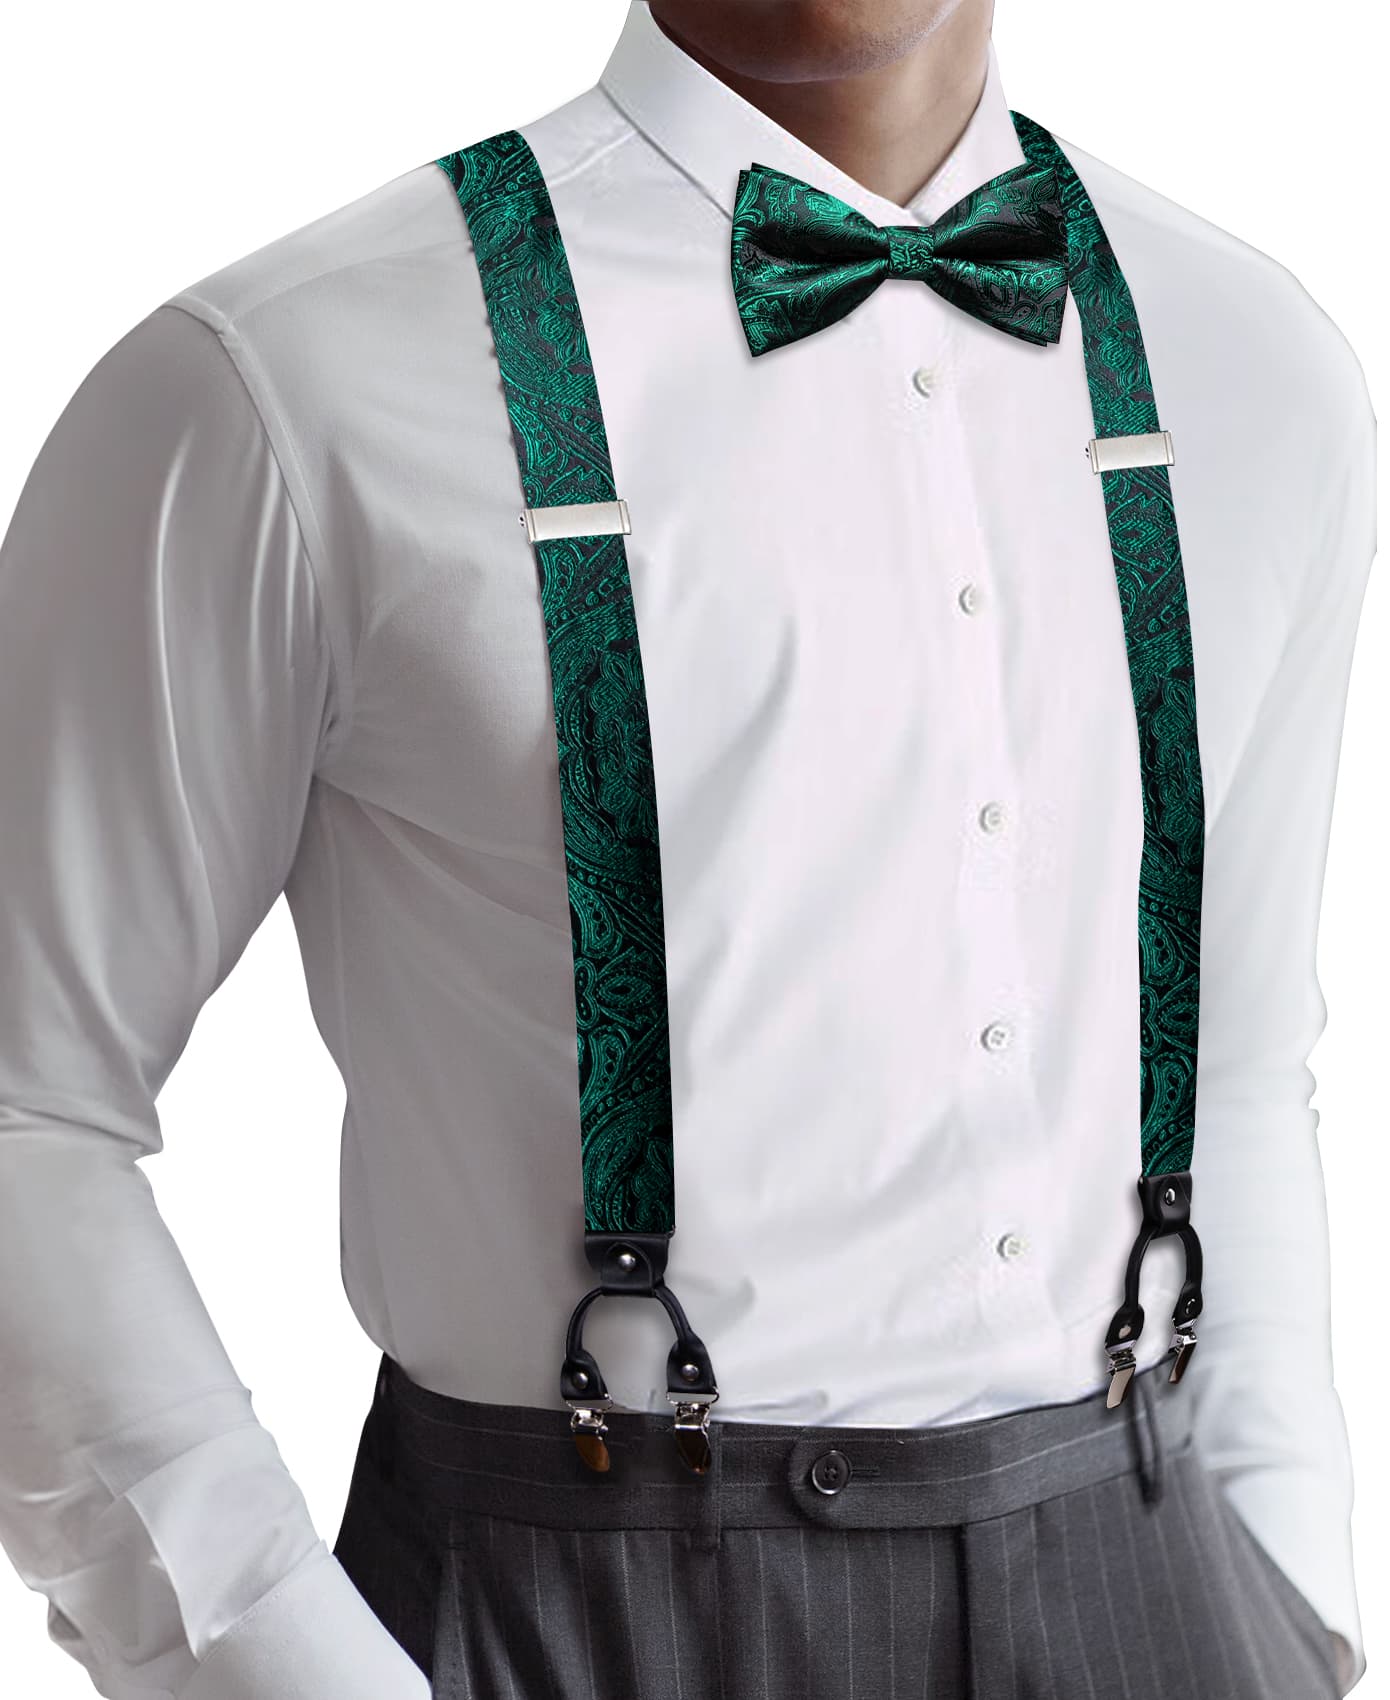 suspender and bow tie look